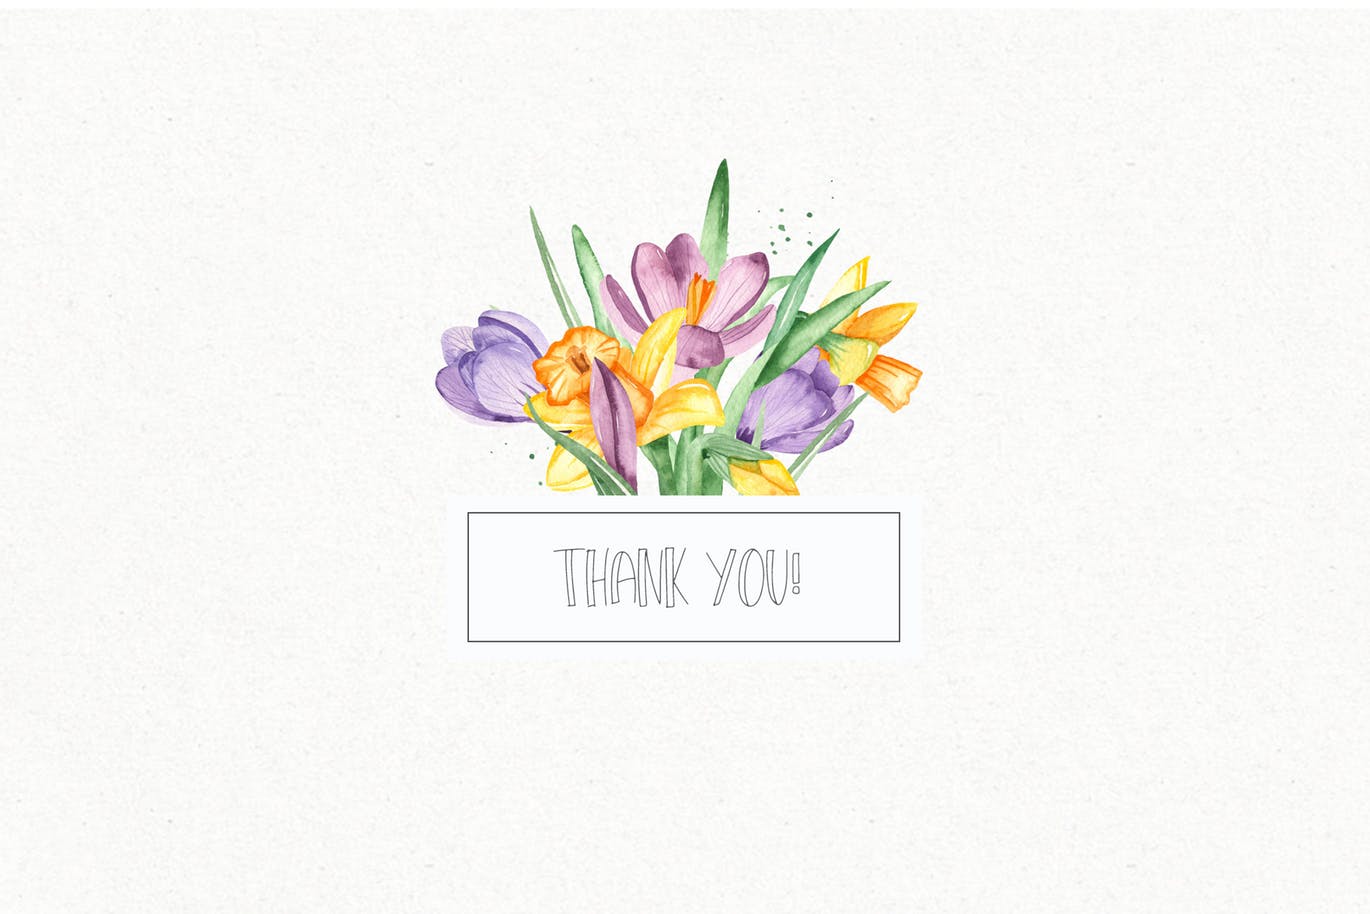 春季花卉水彩素材套装 Watercolor spring flowers collection插图10